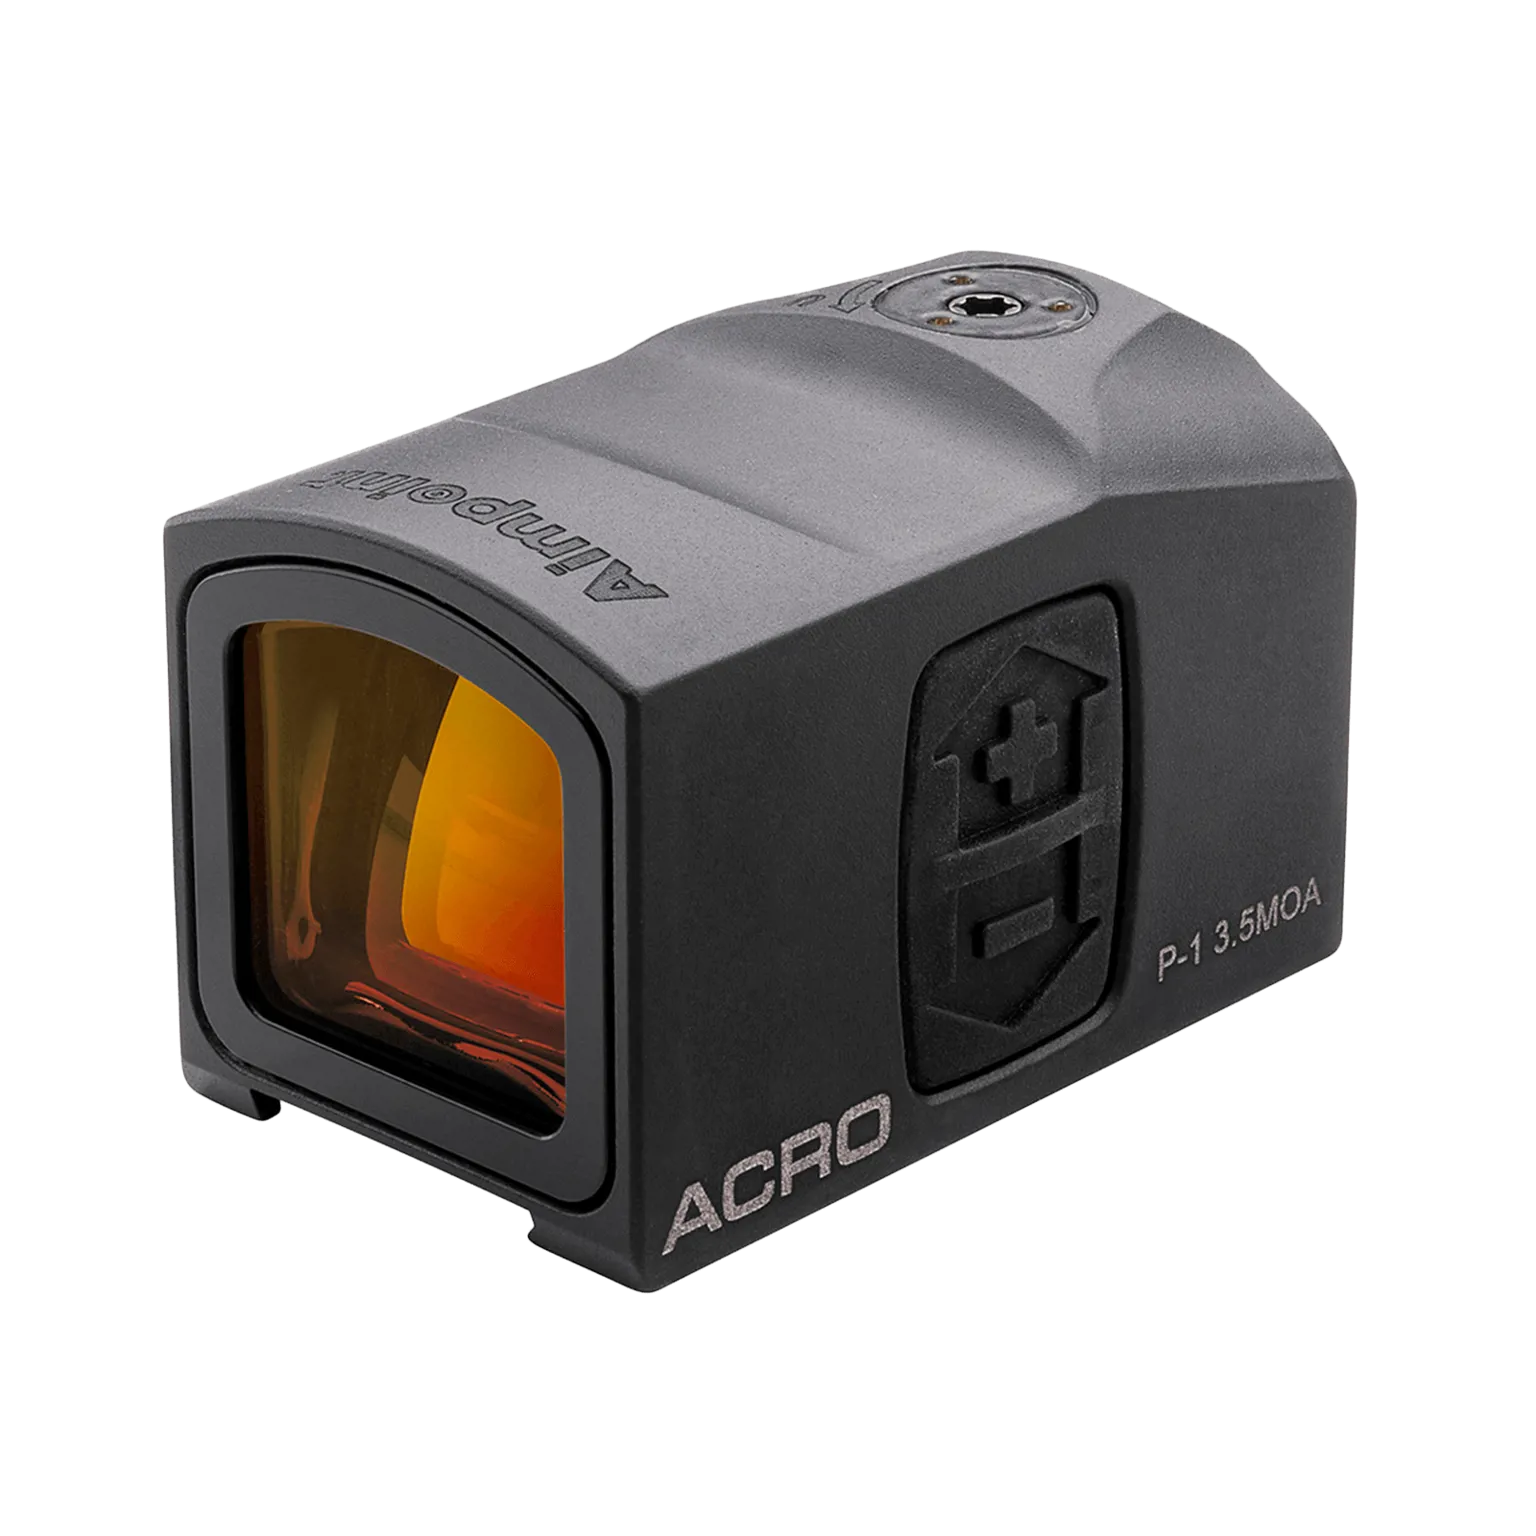 Acro P-1™ 3.5 MOA - Rotpunktvisier mit integrierter Acro™ Schnittstelle - 1